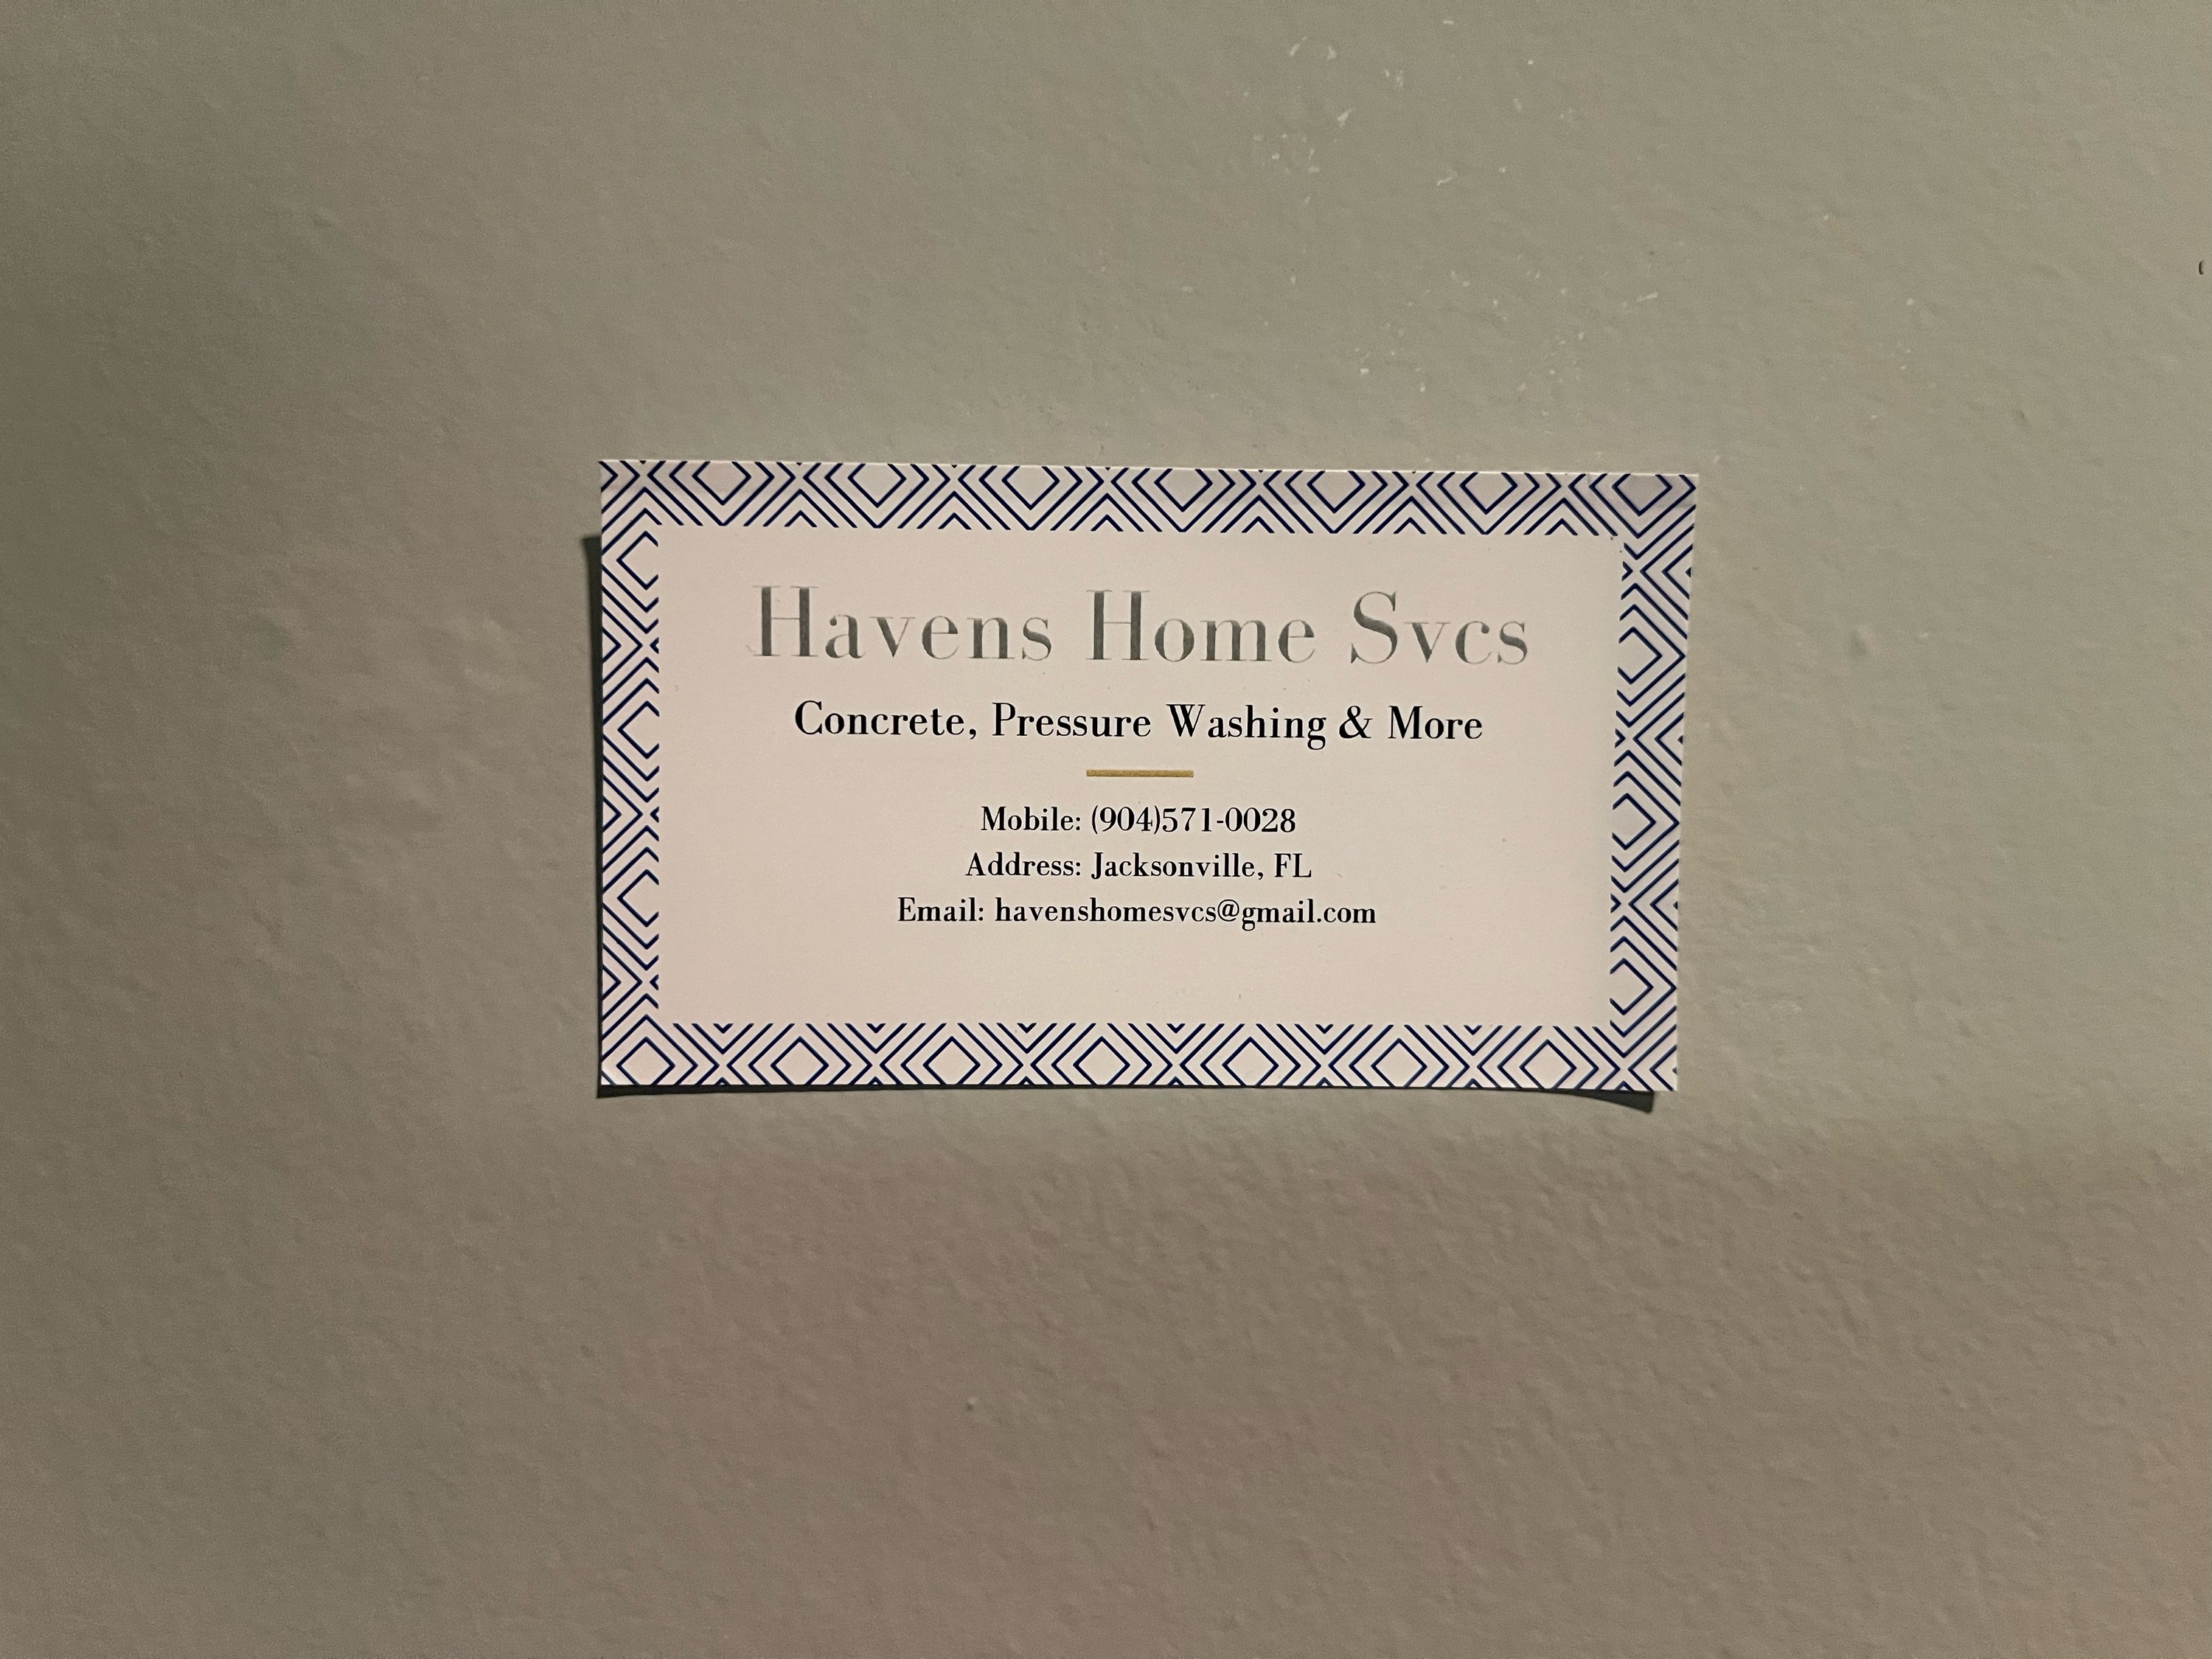 Havens Home Services Logo